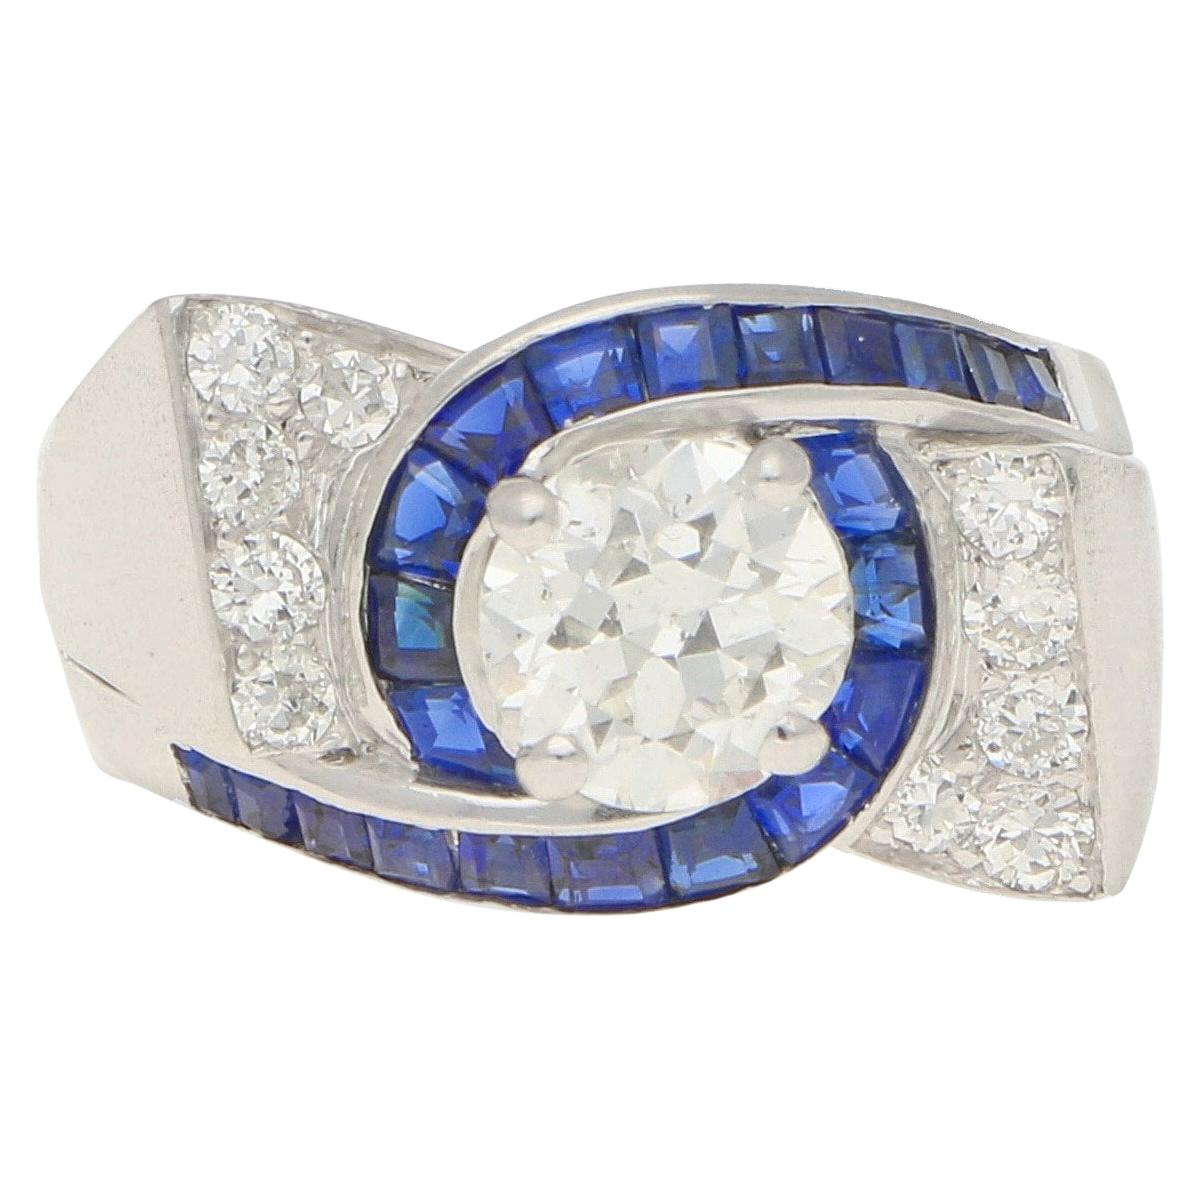 Oscar Heyman Art Deco Style Diamond and Sapphire Engagement Ring Set in Platinum